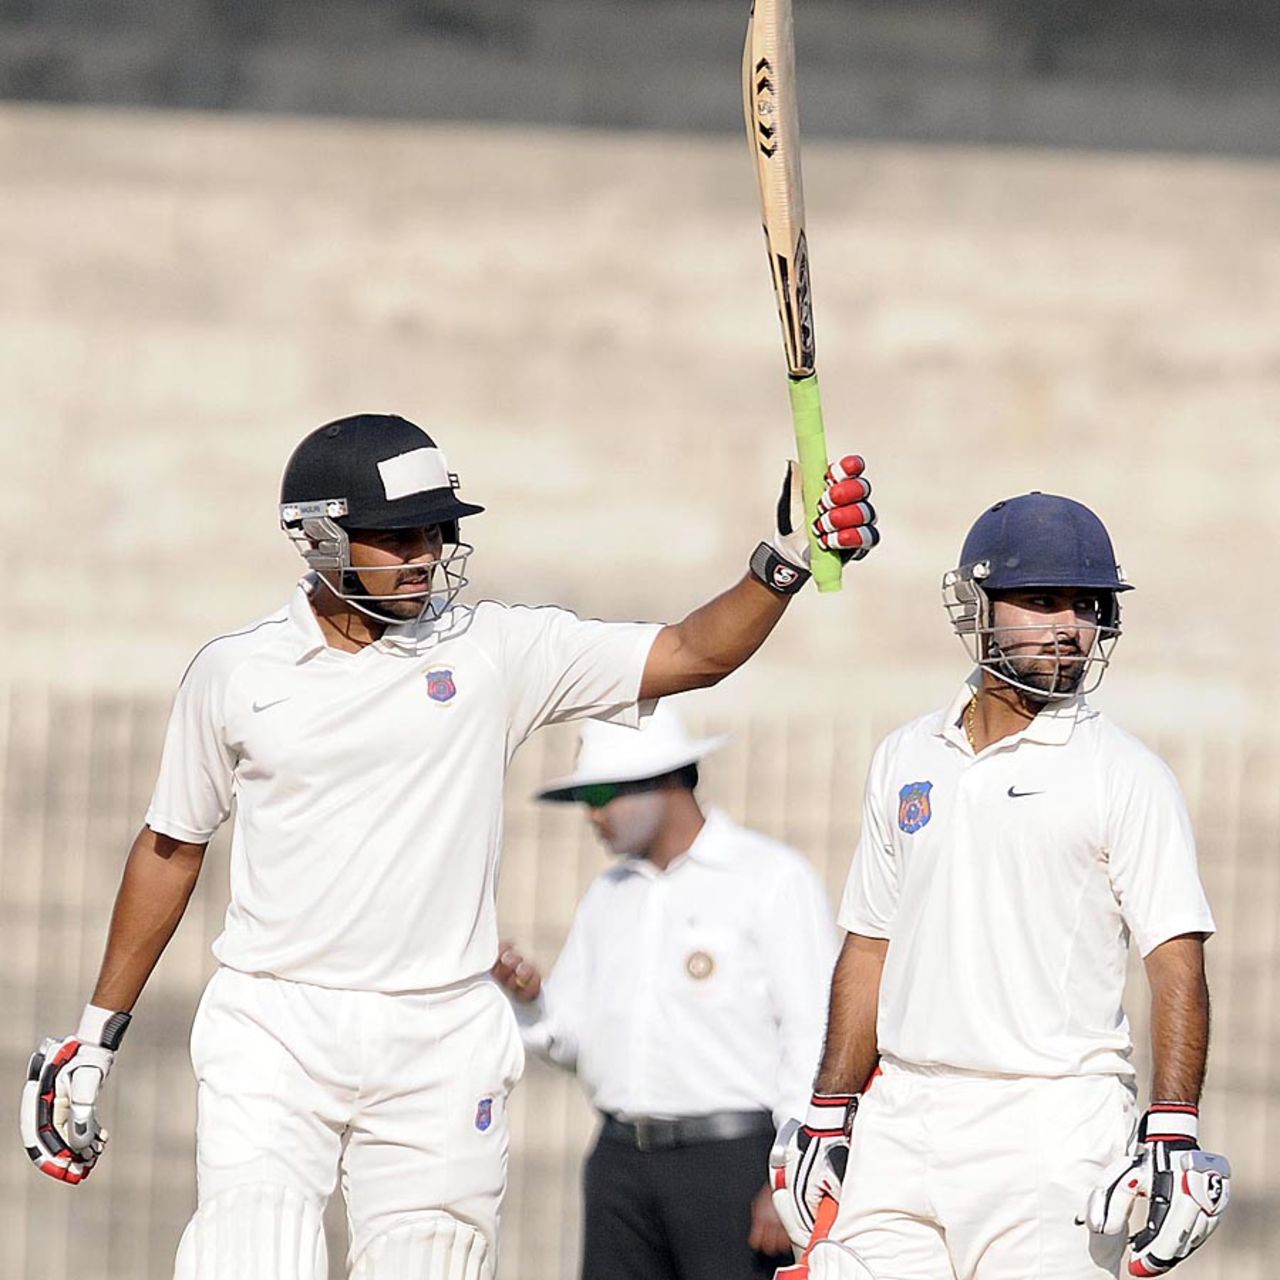 Shrikant Mundhe raises his bat after scoring a half-century, Tamil Nadu v Maharashtra, Ranji Trophy, Group B, 2nd day, Chennai, November 18, 2012